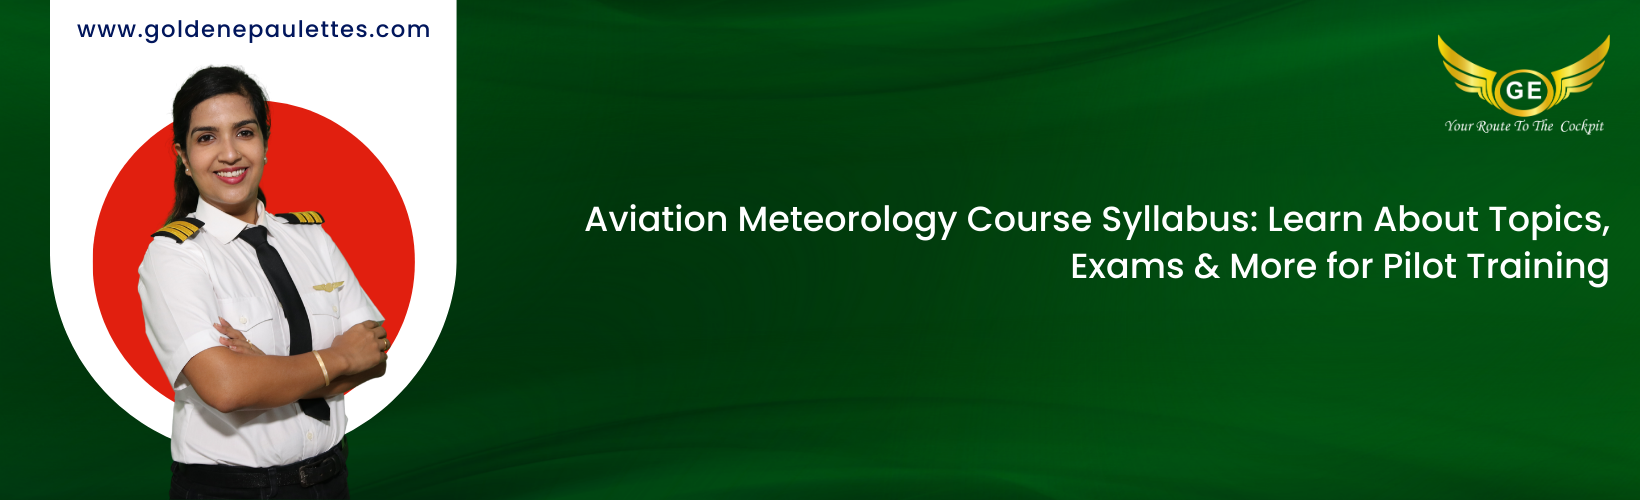 Aviation Meteorology Course Syllabus